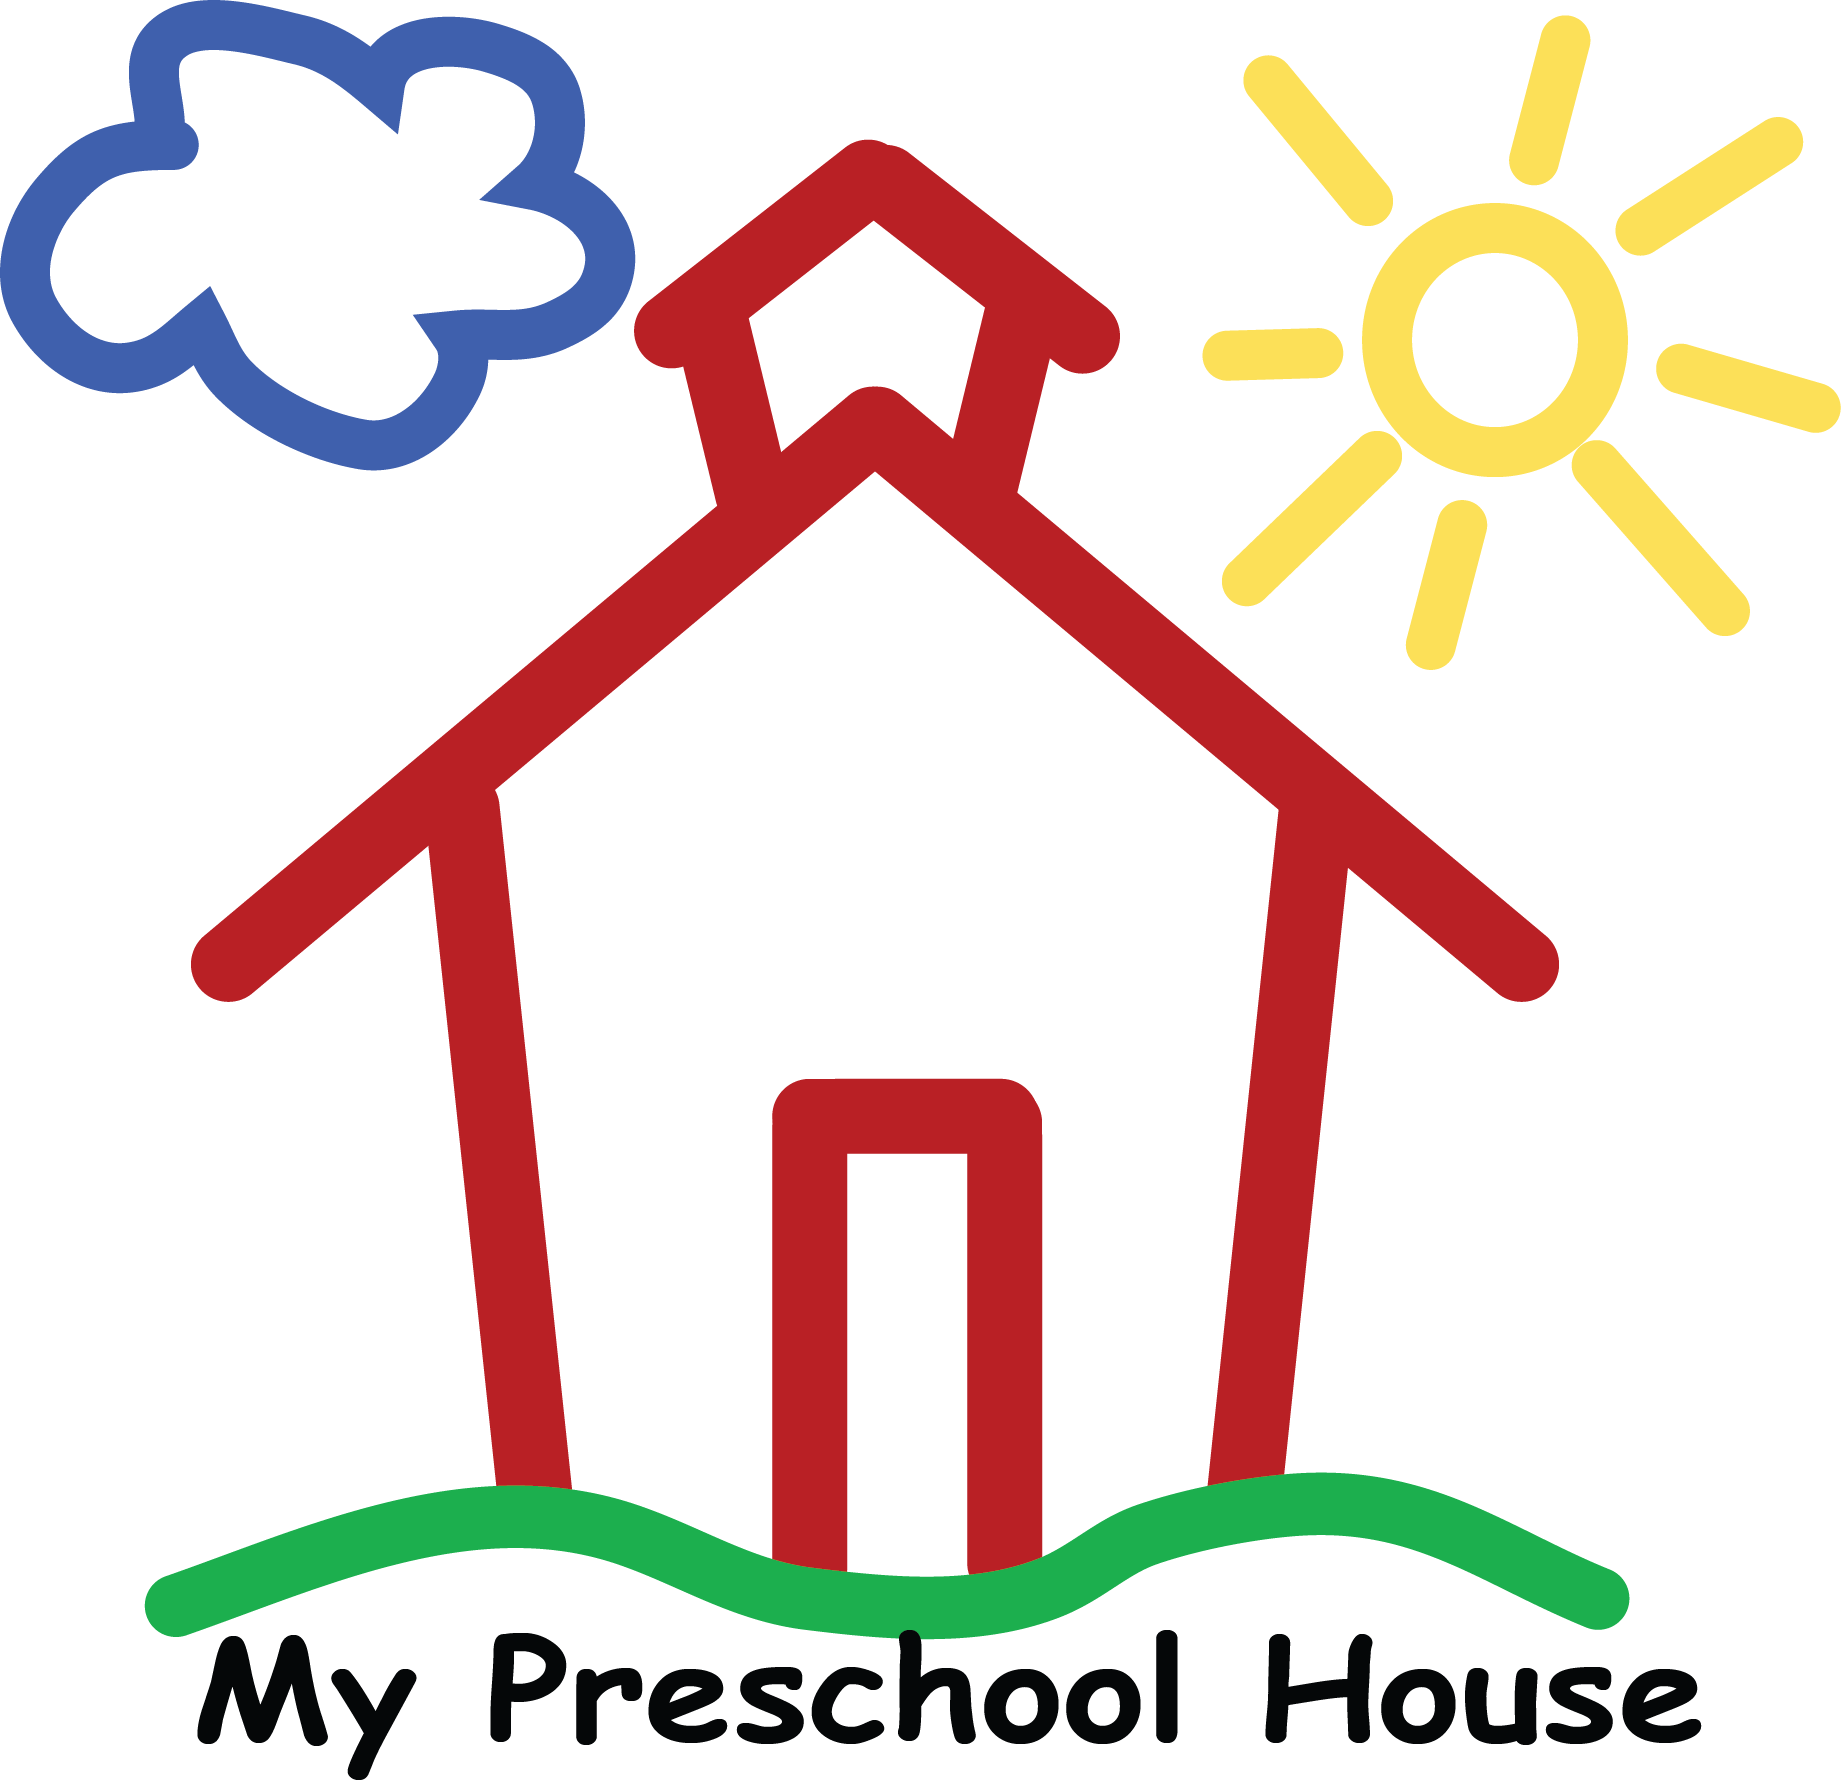 My Preschool House logo